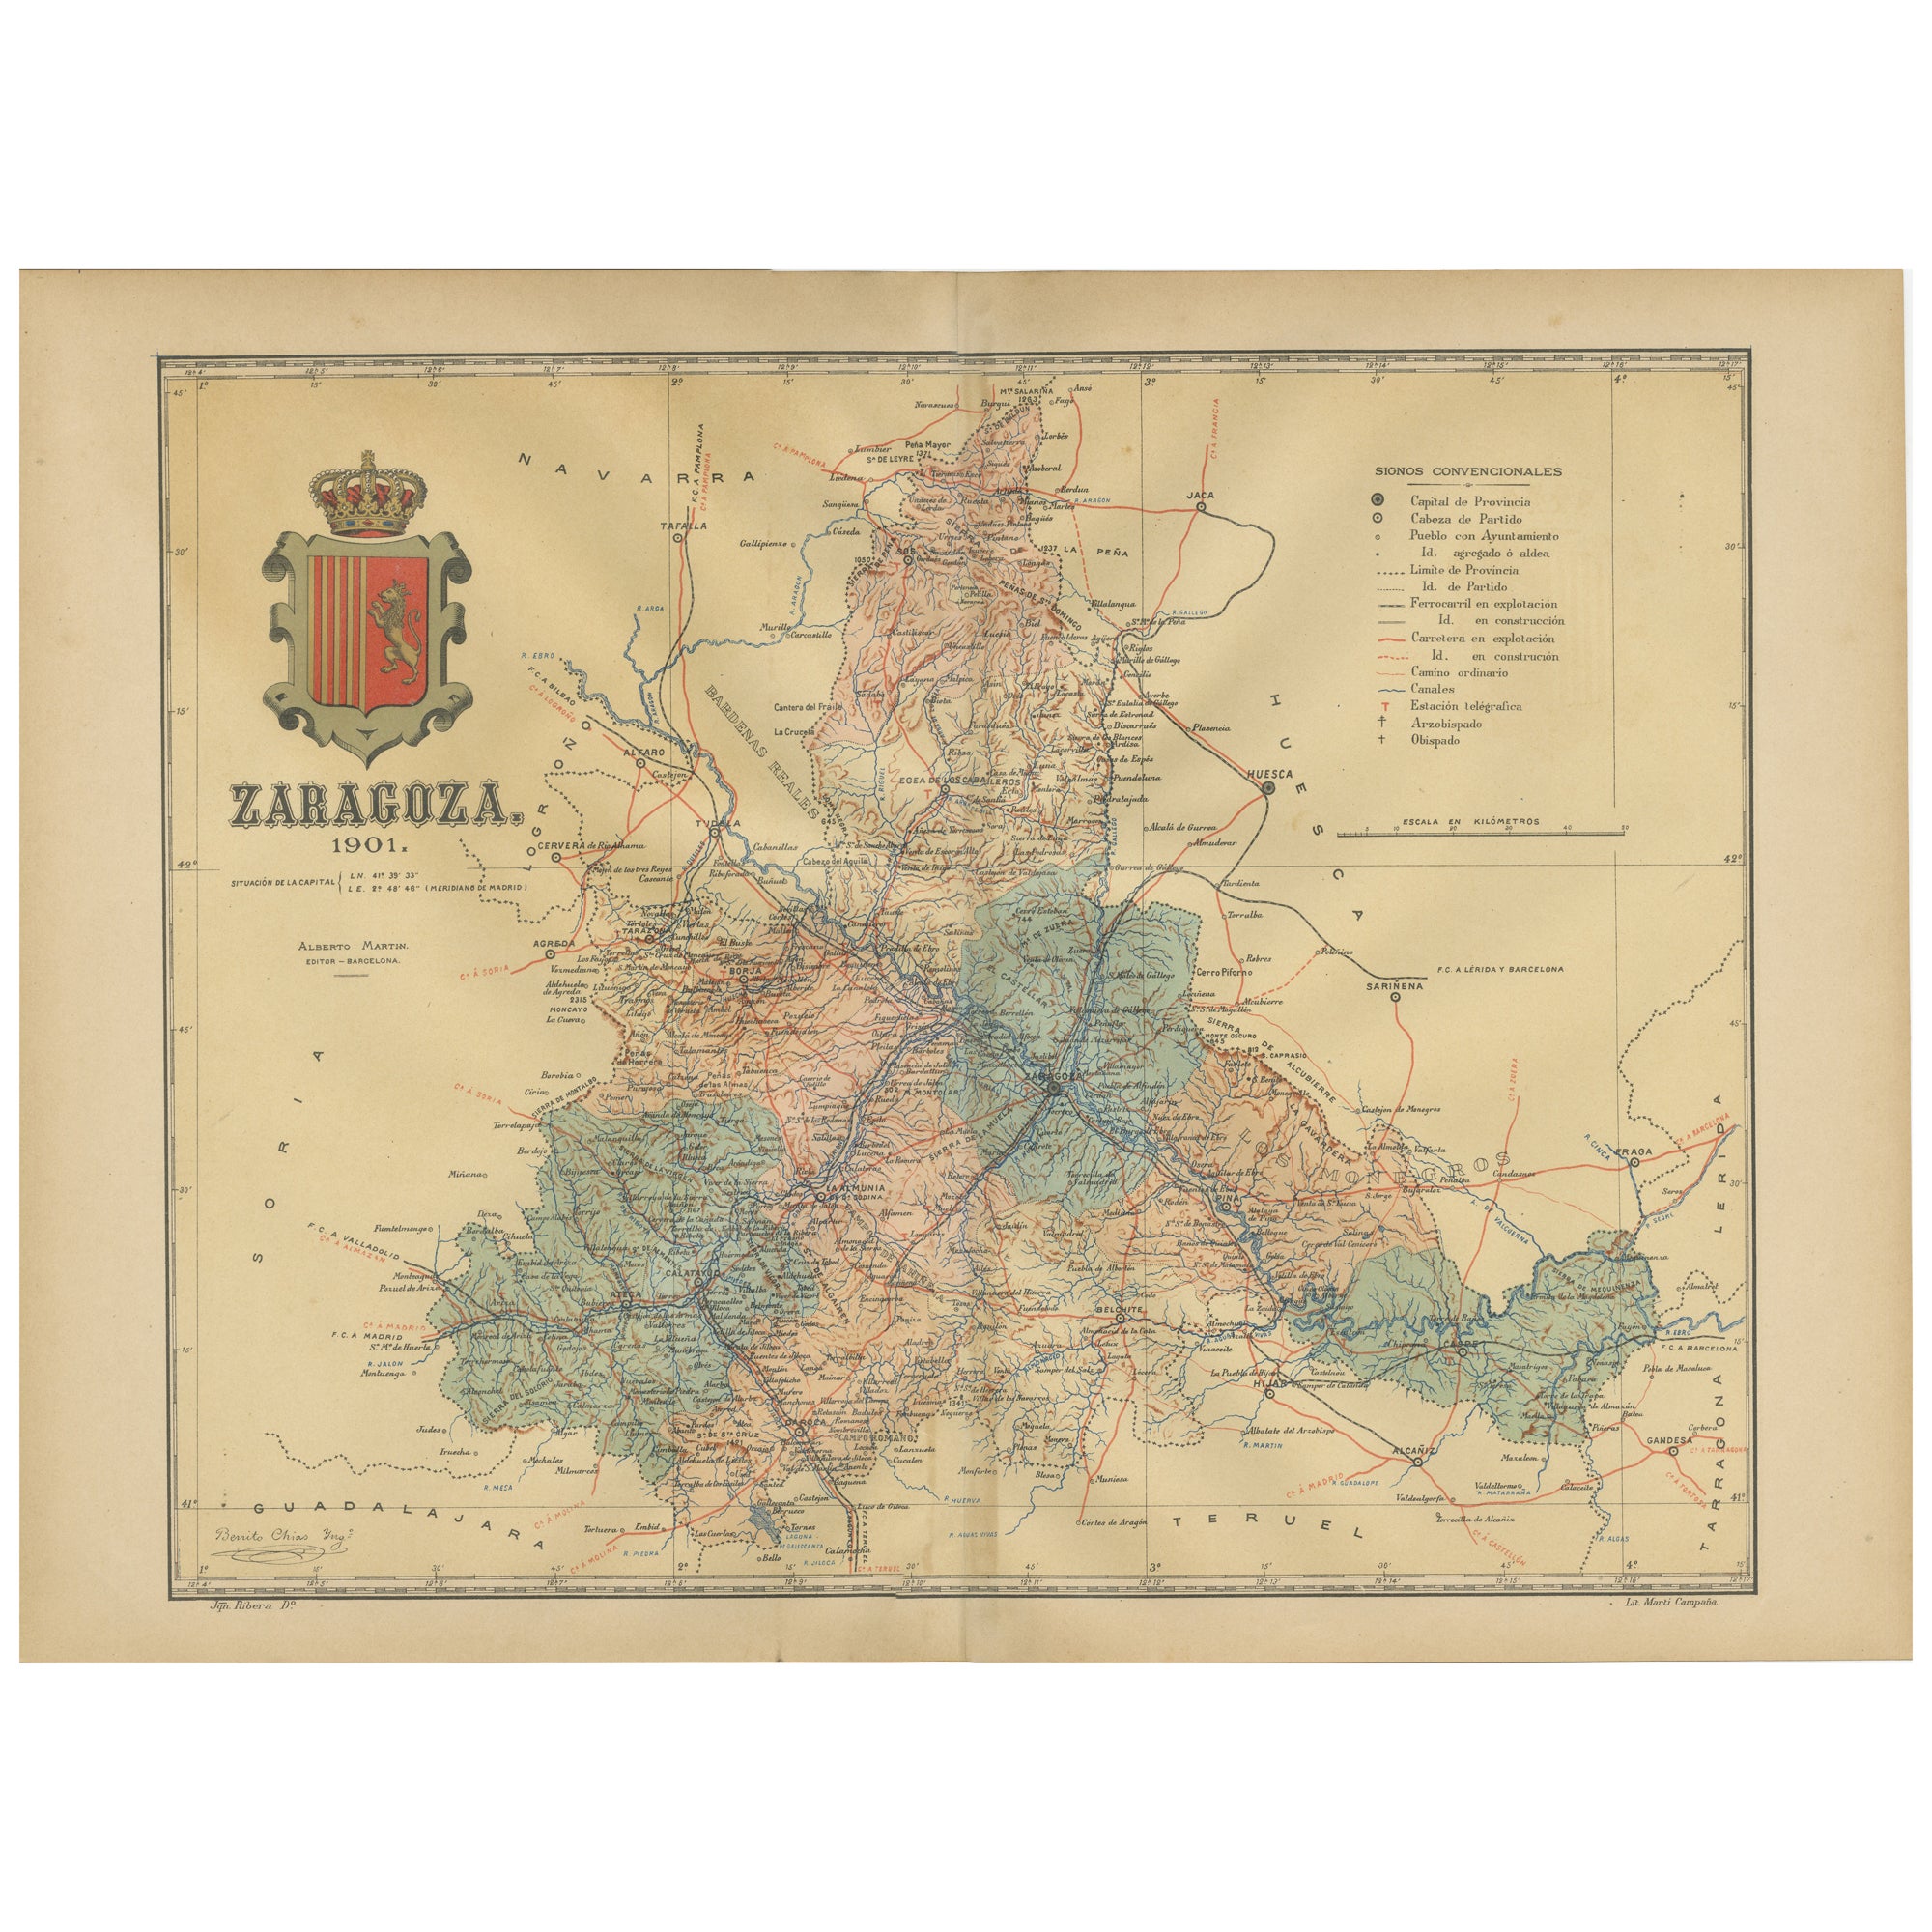 Zaragoza : Crossroads of Heritage - The 1901 Cartographic Chronicle